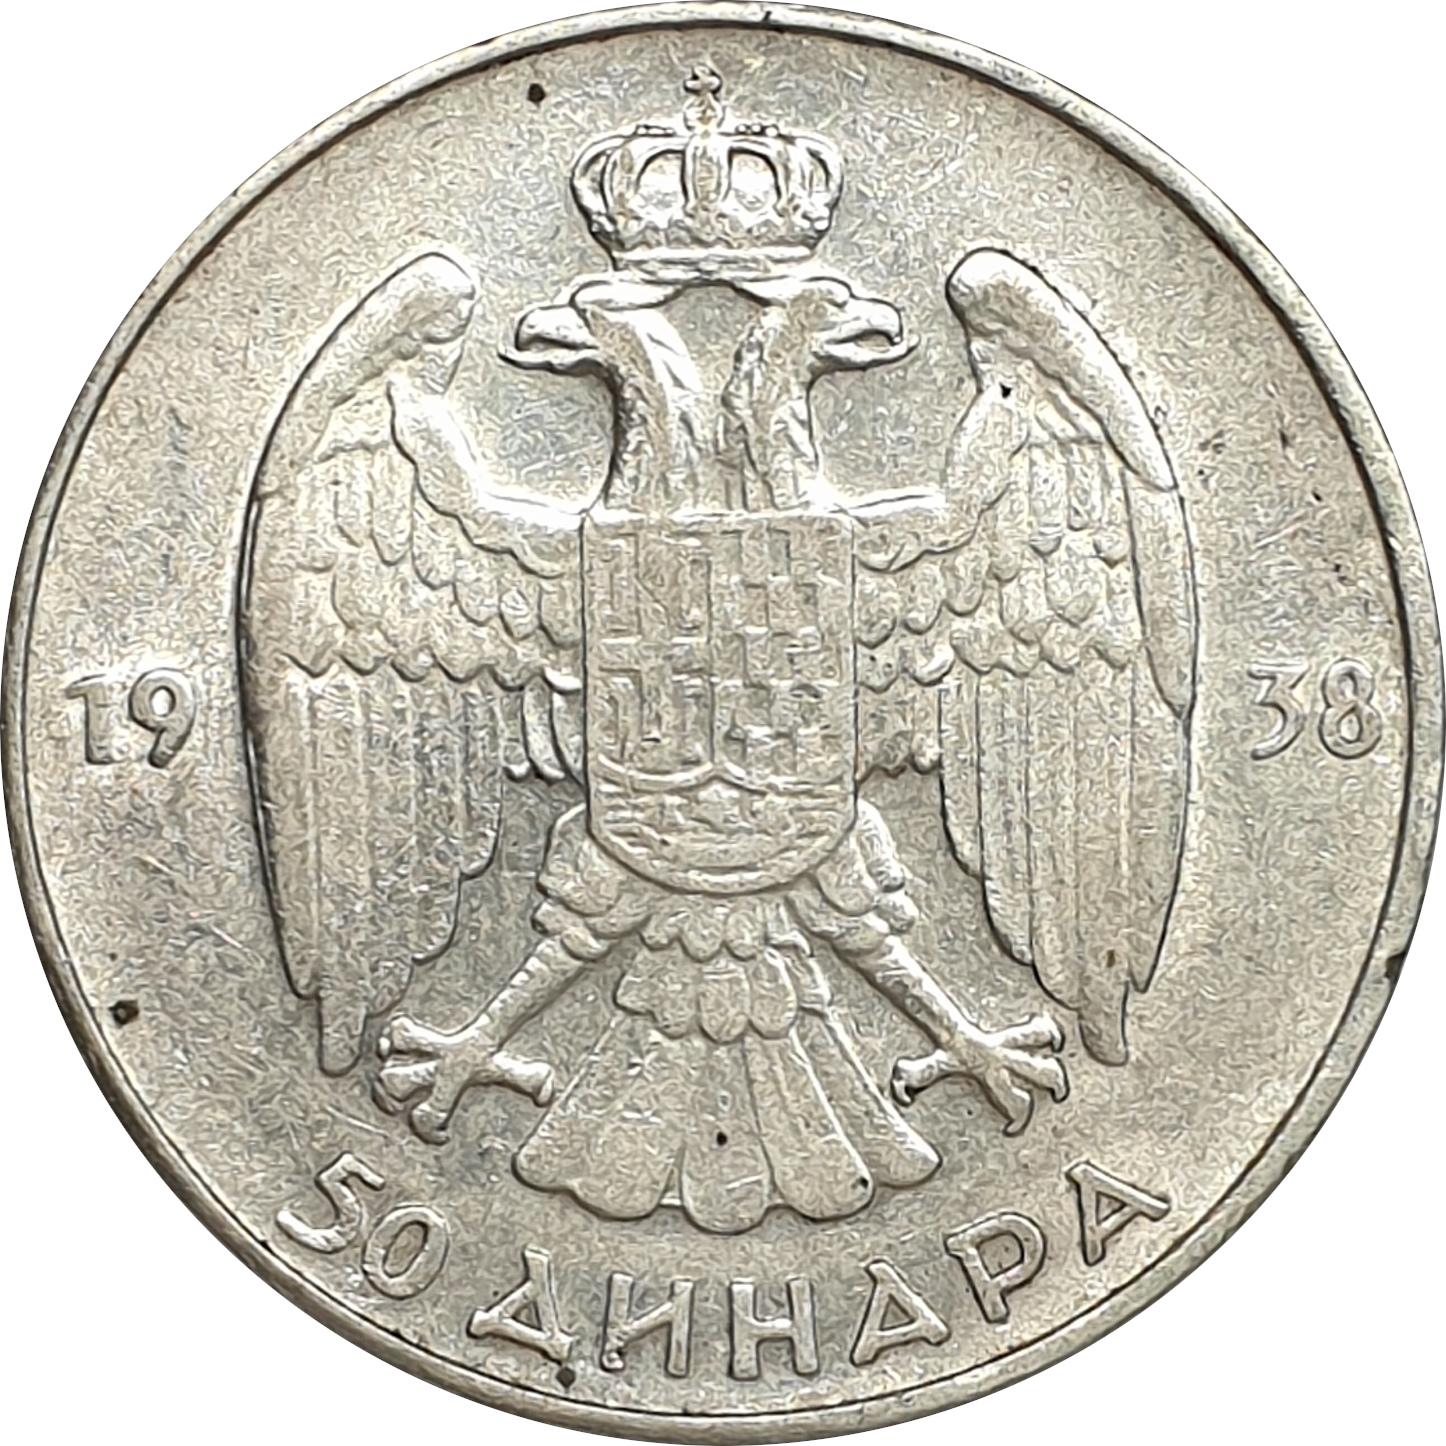 50 dinara - Mature head